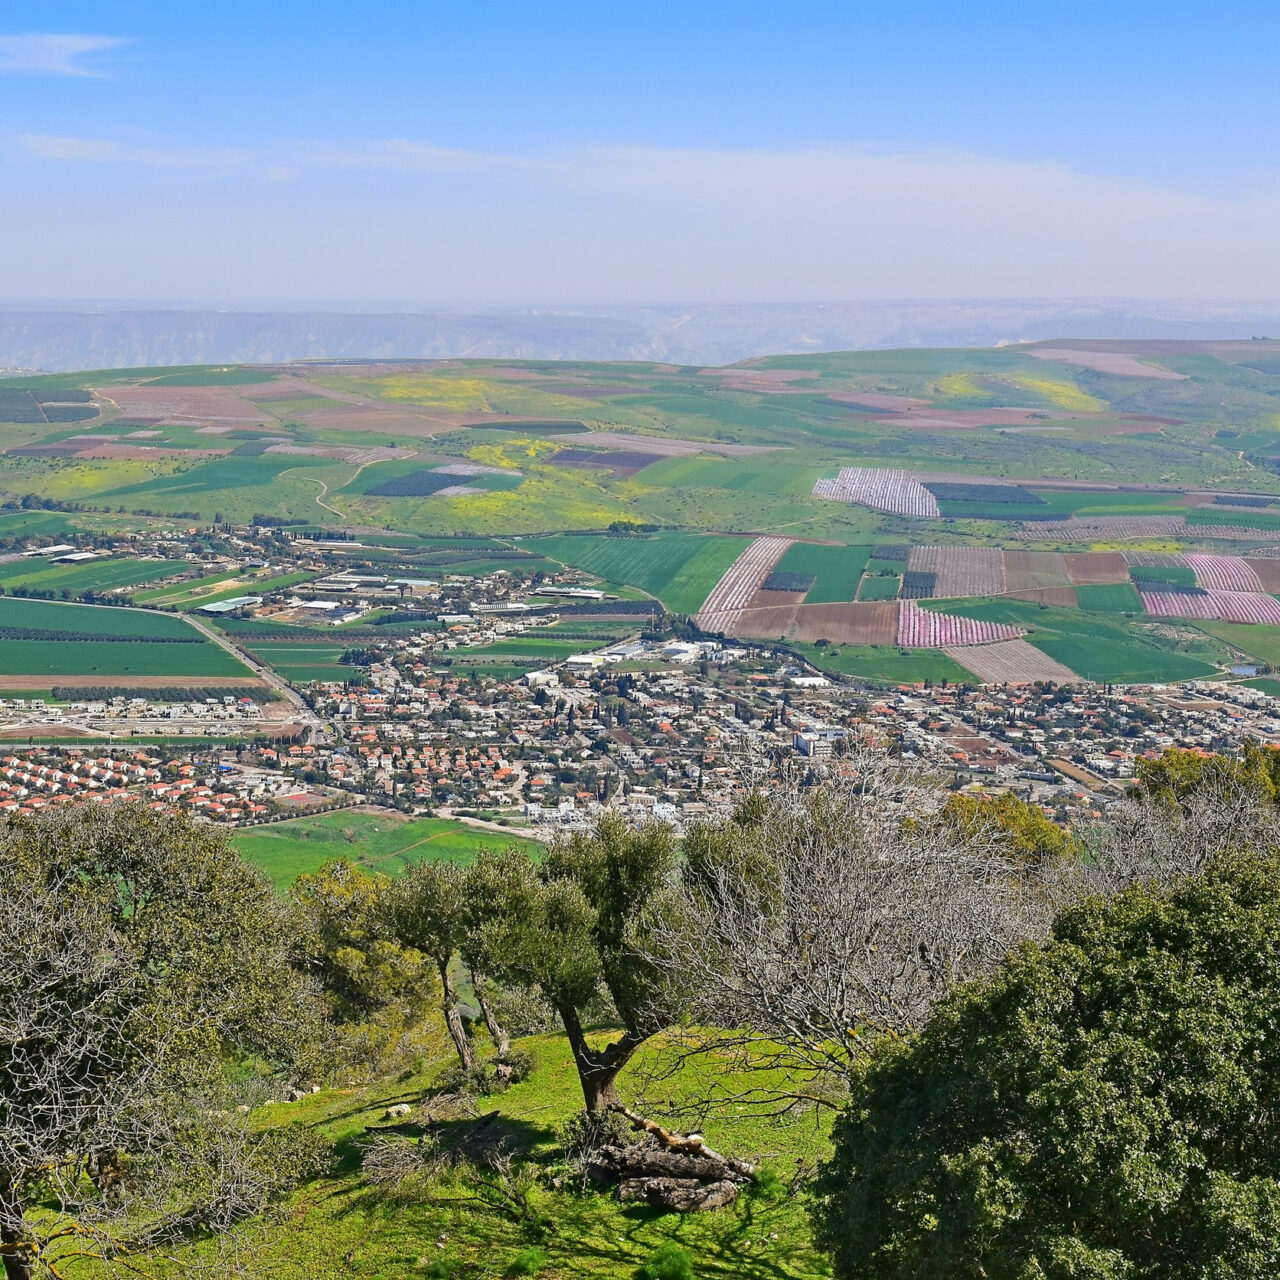 Jezreel Valley, Lower Galilee, Israel